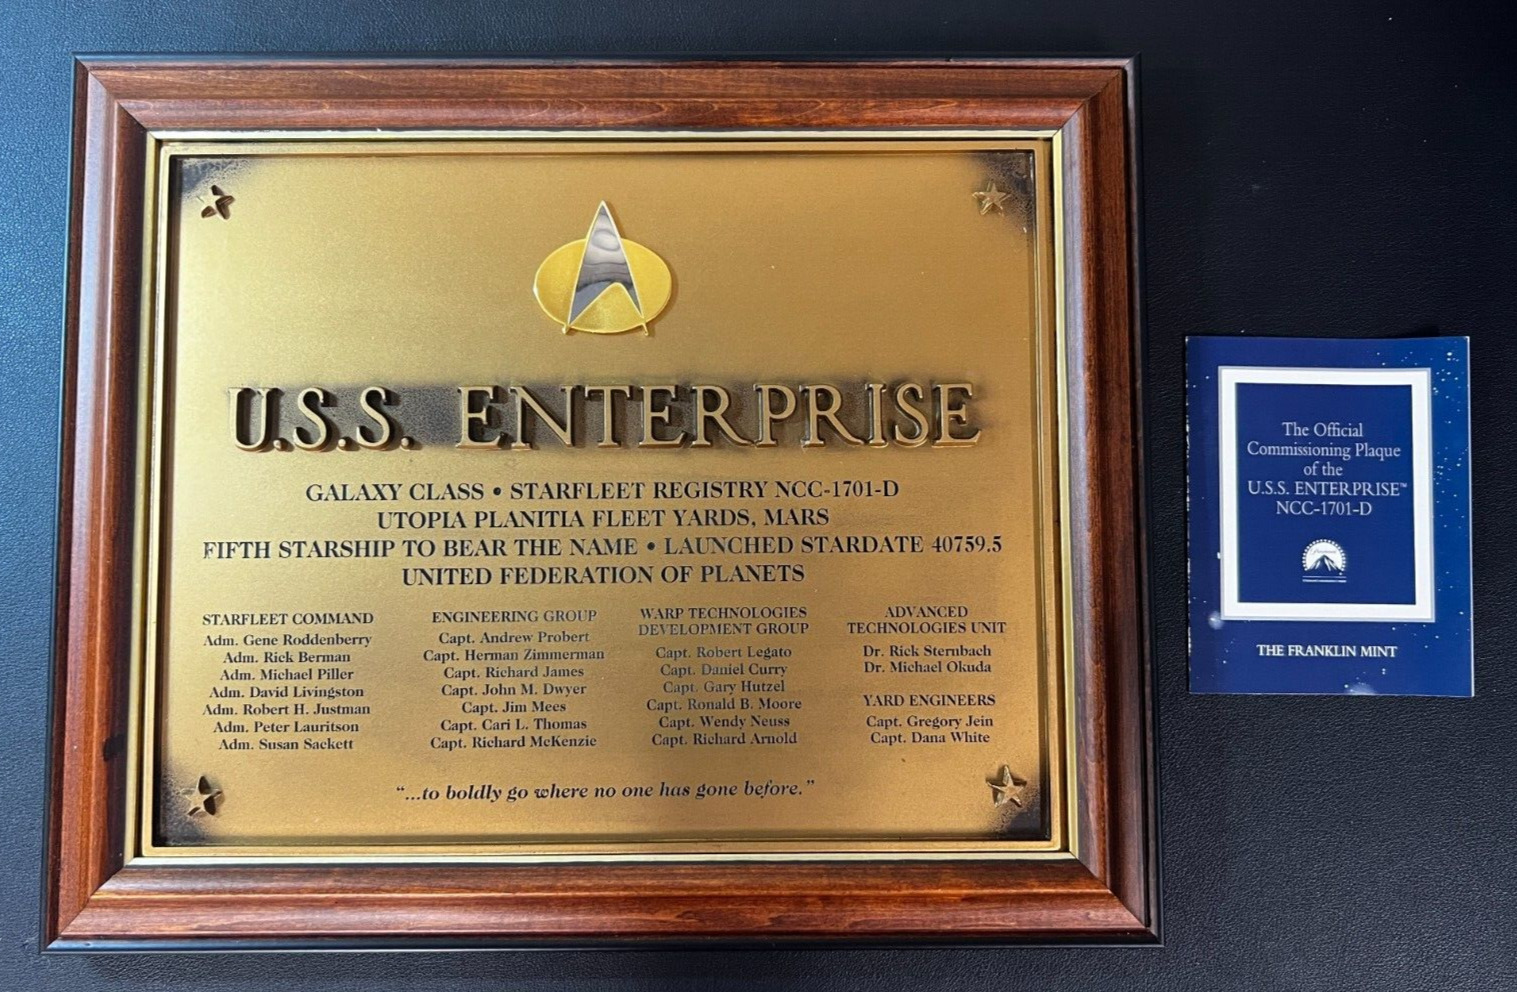 Franklin Mint Star Trek Official Commissioning Plaque of USS Enterprise NCC-1701